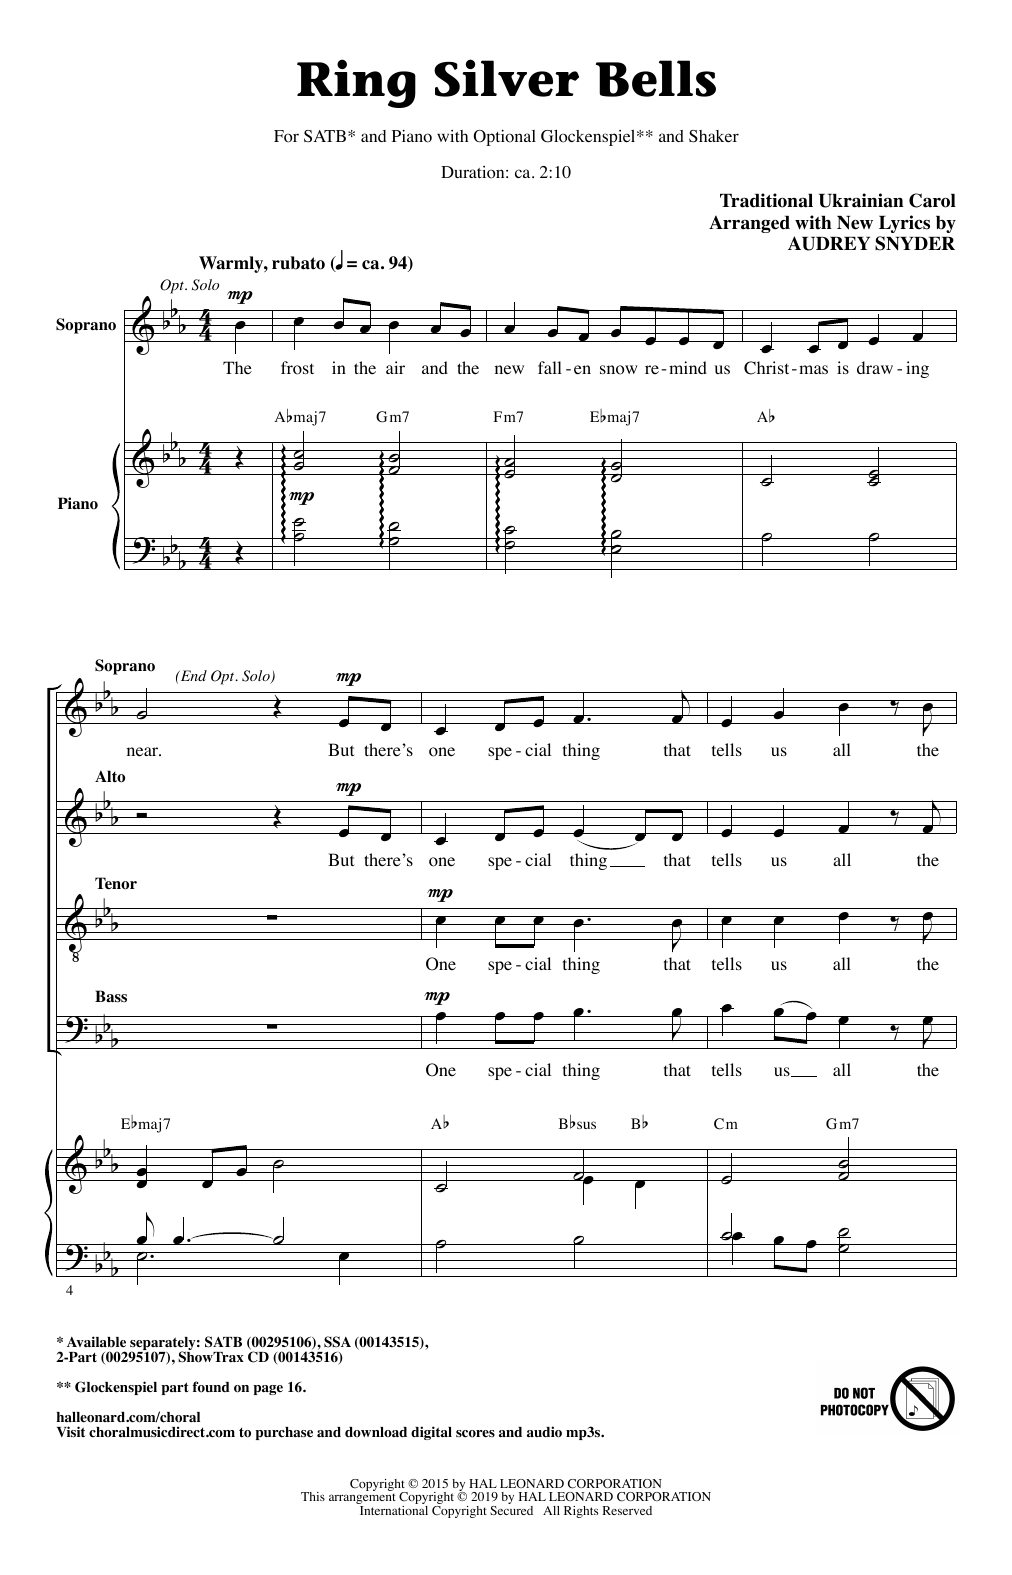 Download Traditional Ukrainian Carol Ring Silver Bells (arr. Audrey Snyder) Sheet Music